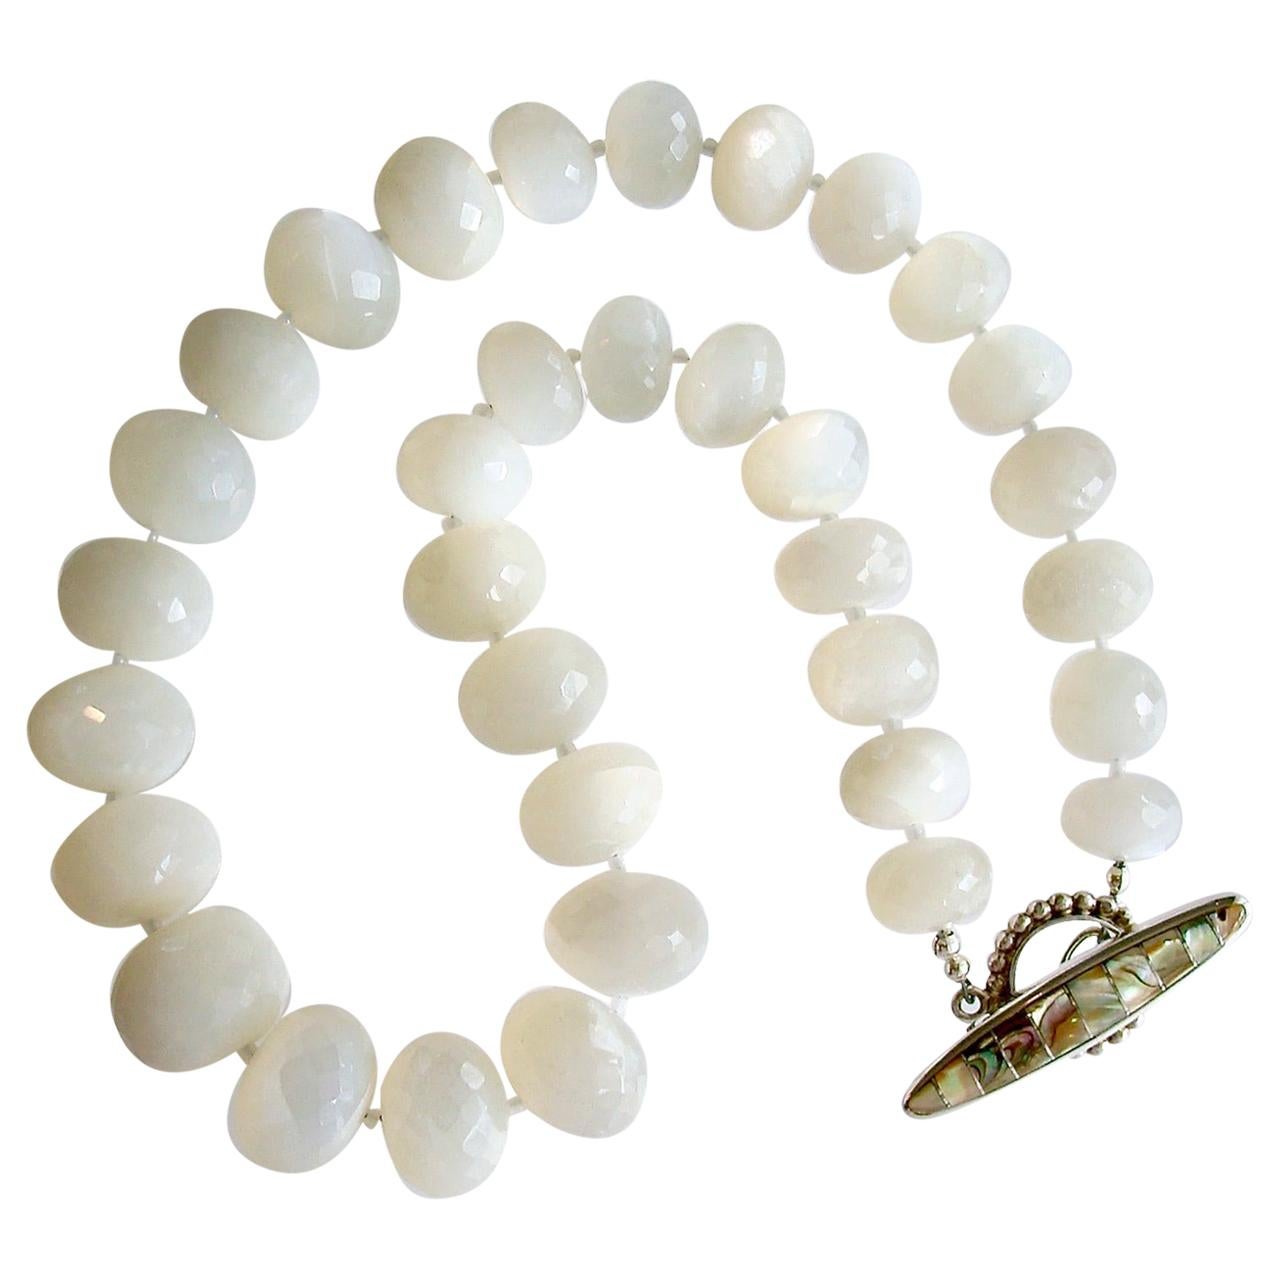 White Moonstone Choker Necklace with Abalone Inlay Toggle, Selene Necklace